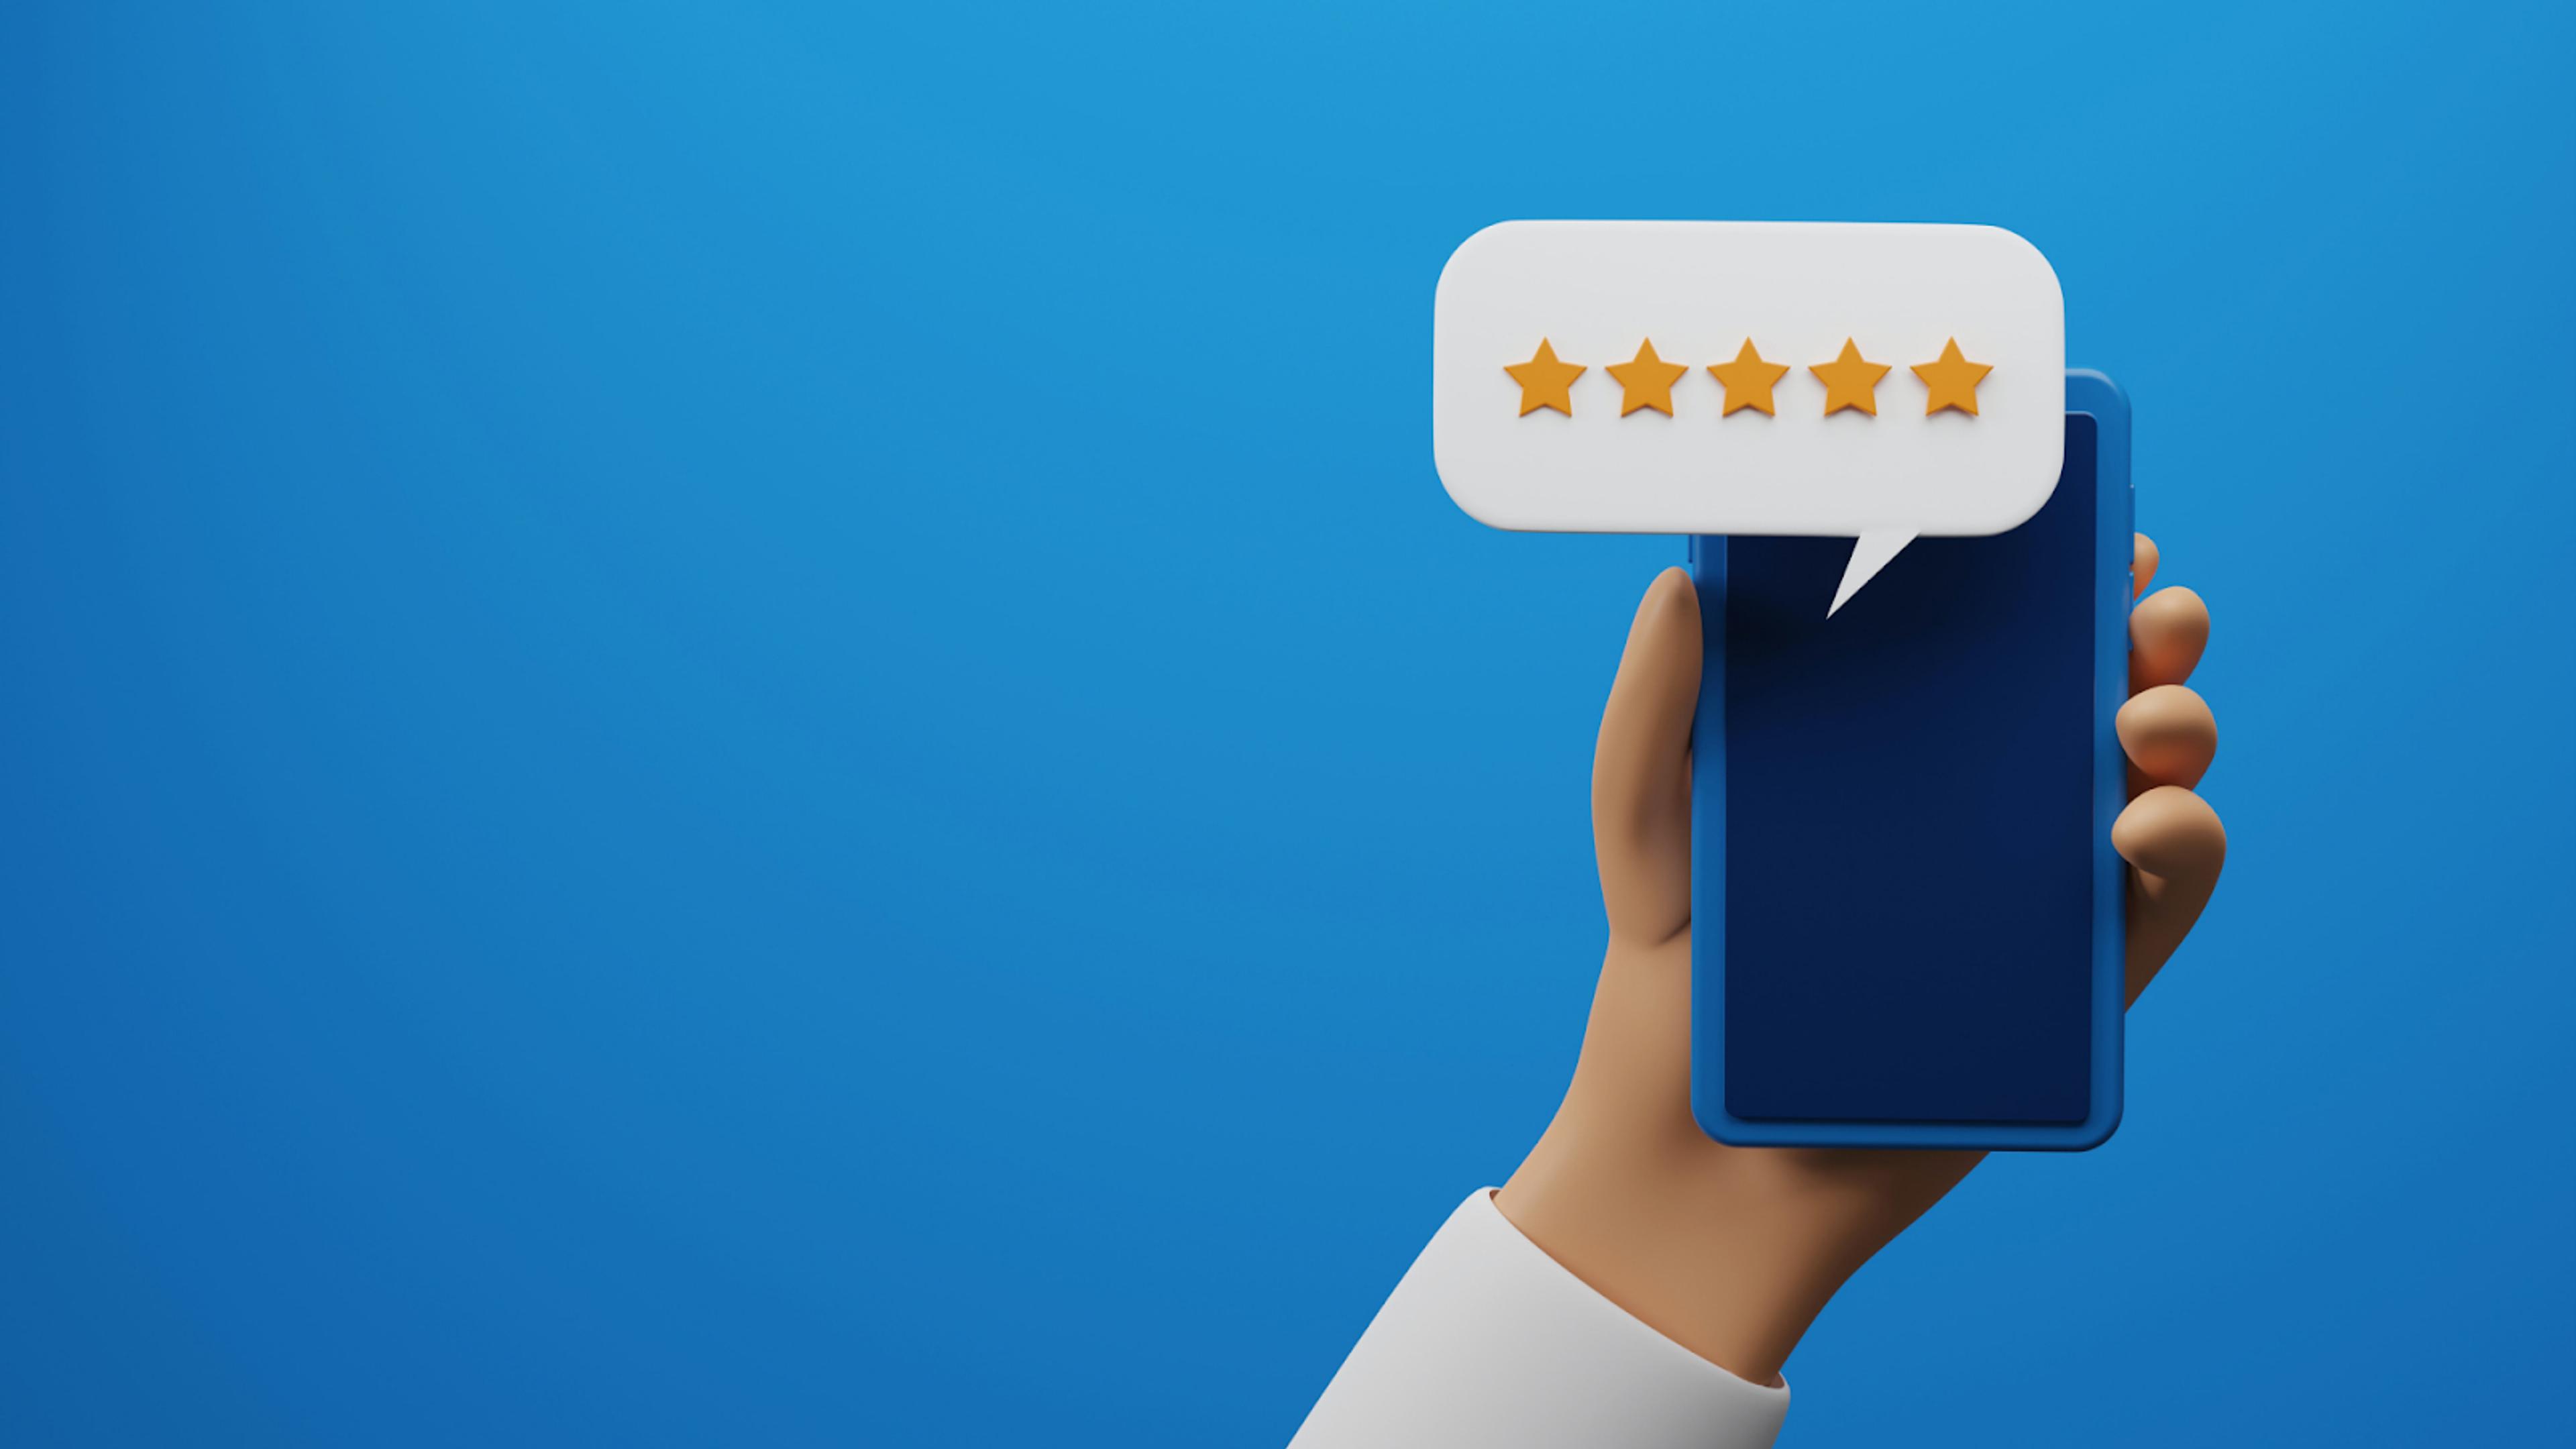 Benefits of Customer Reviews